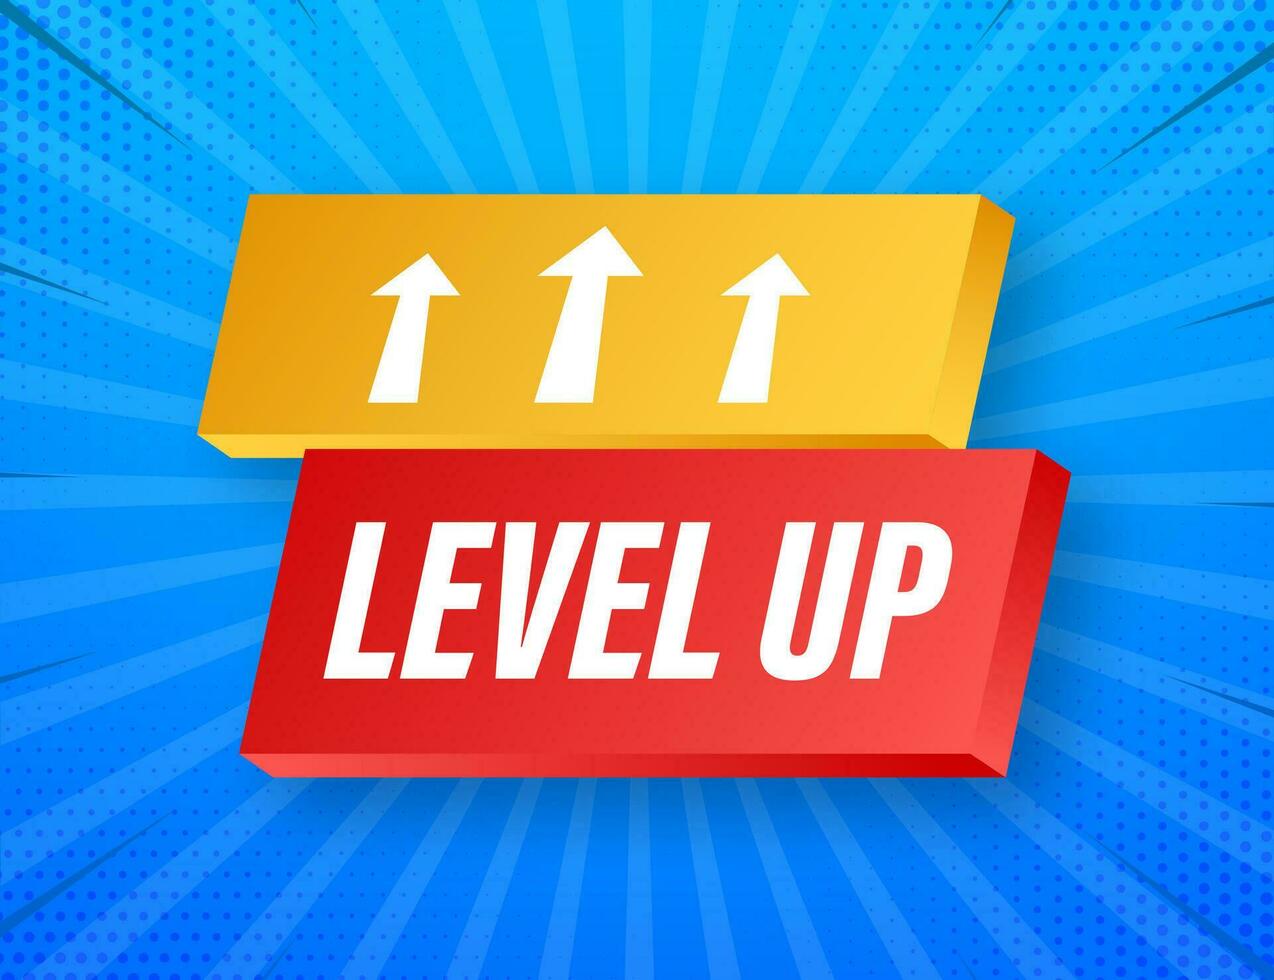 Game icon bonus. level up icon, new level logo. Vector illustration